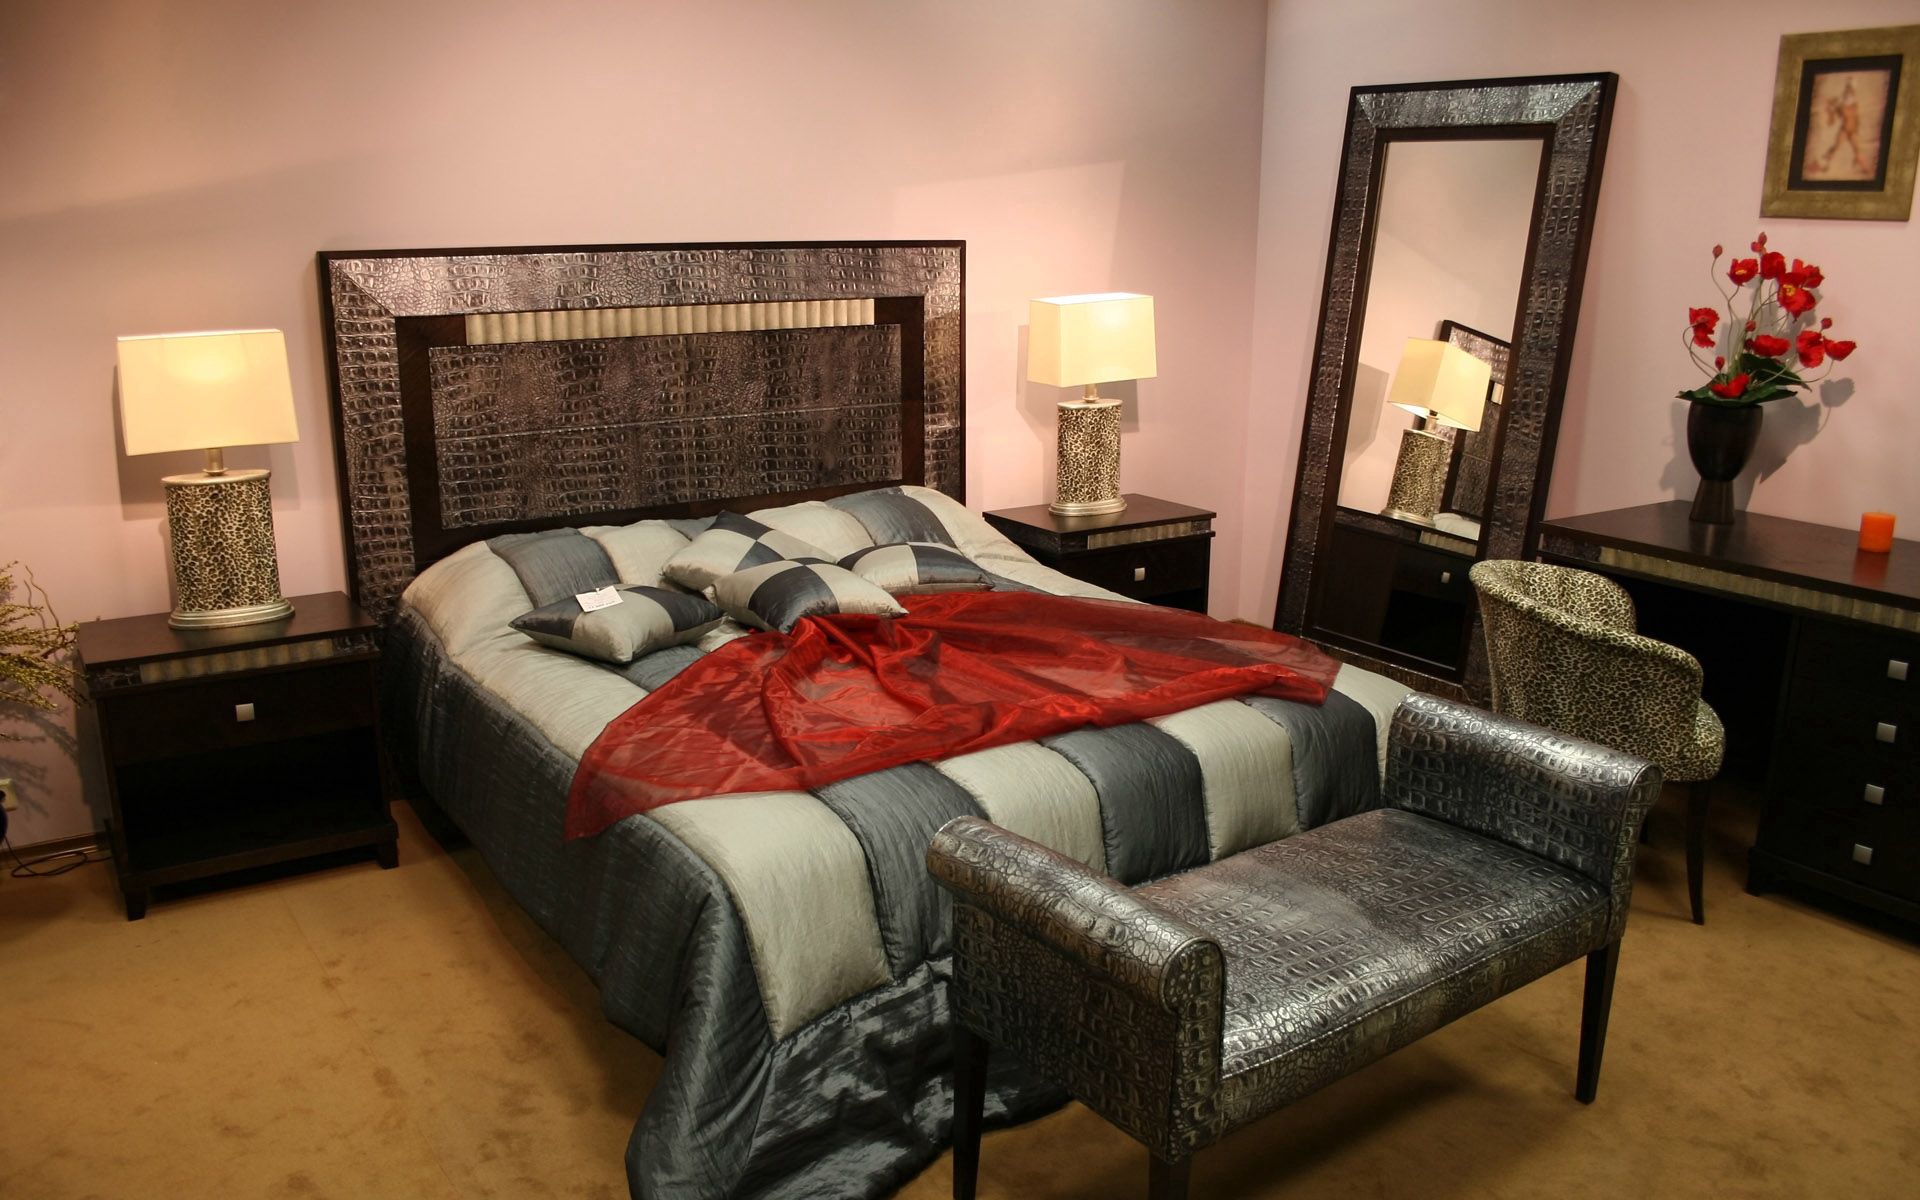 interior, miscellanea, miscellaneous, style, bed, coziness, comfort, sleeping, bedroom